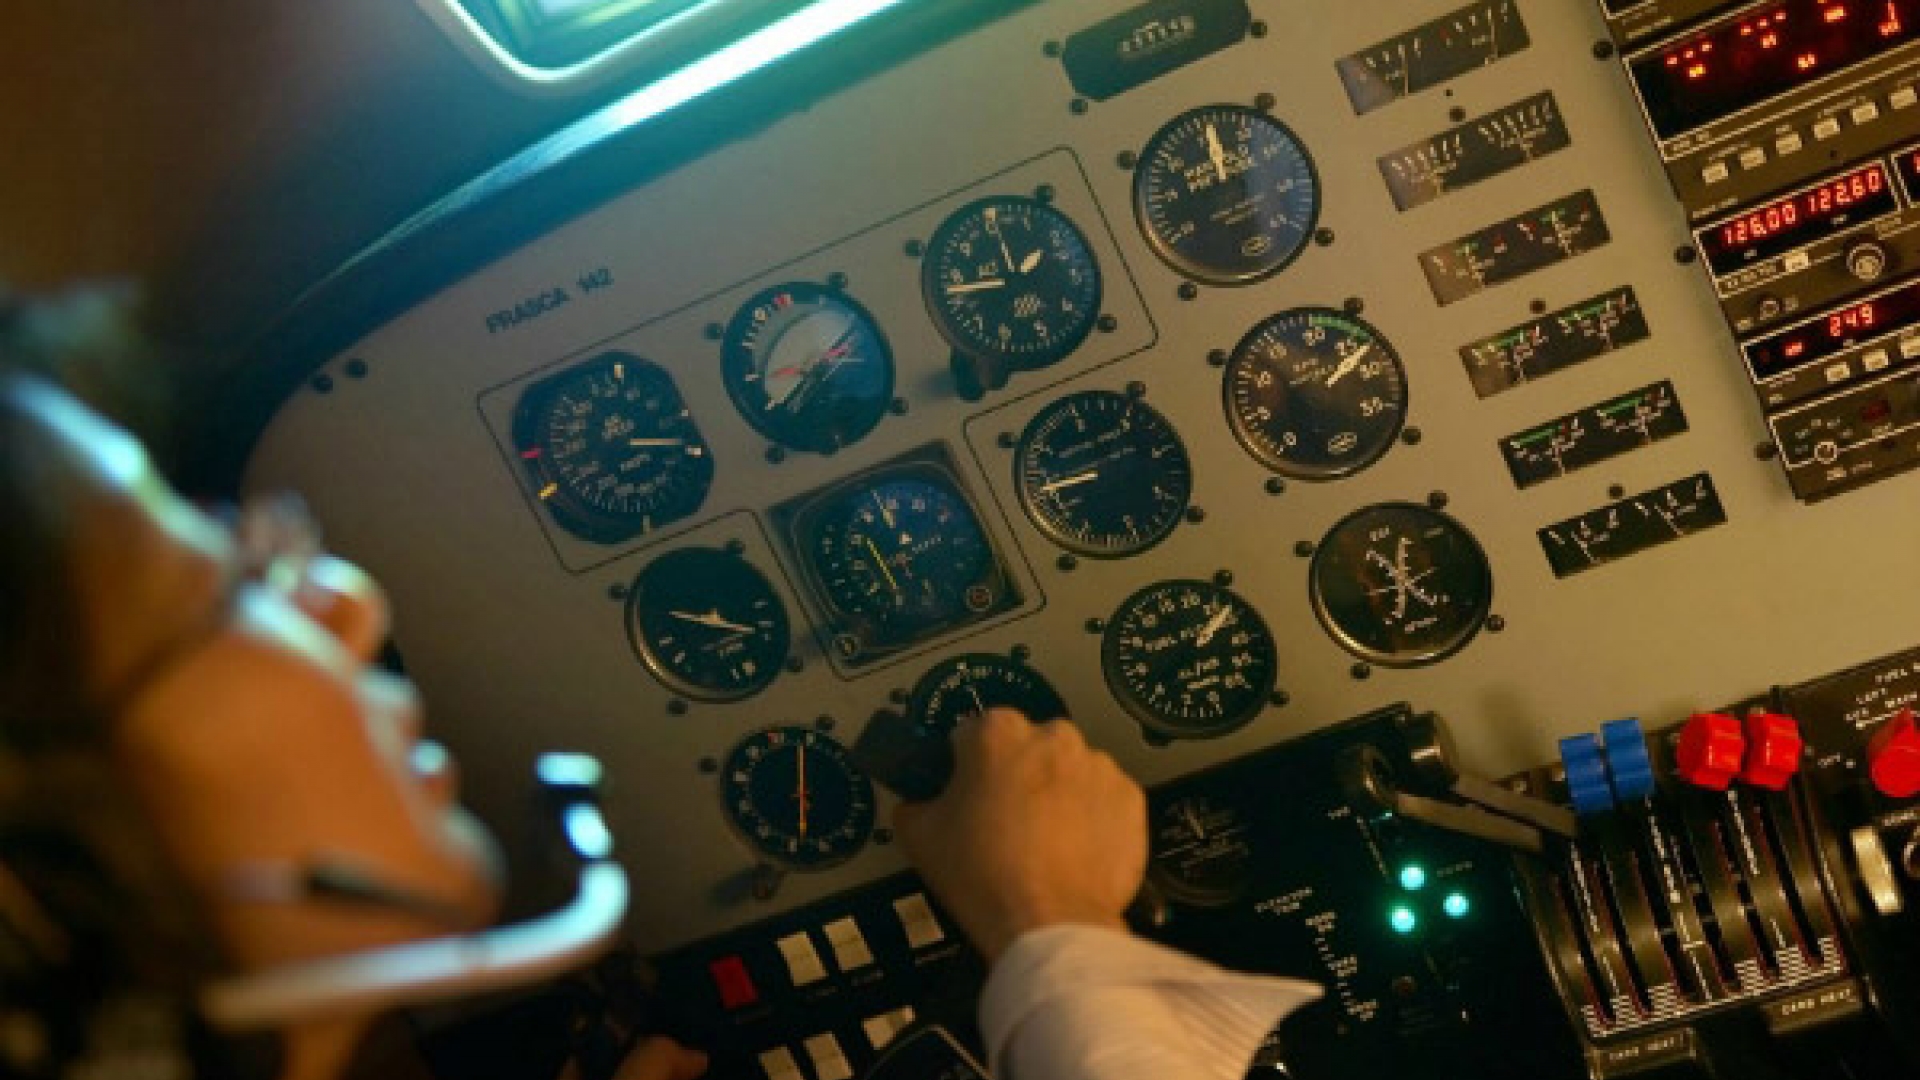 Student in the cockpit adjusting dials.